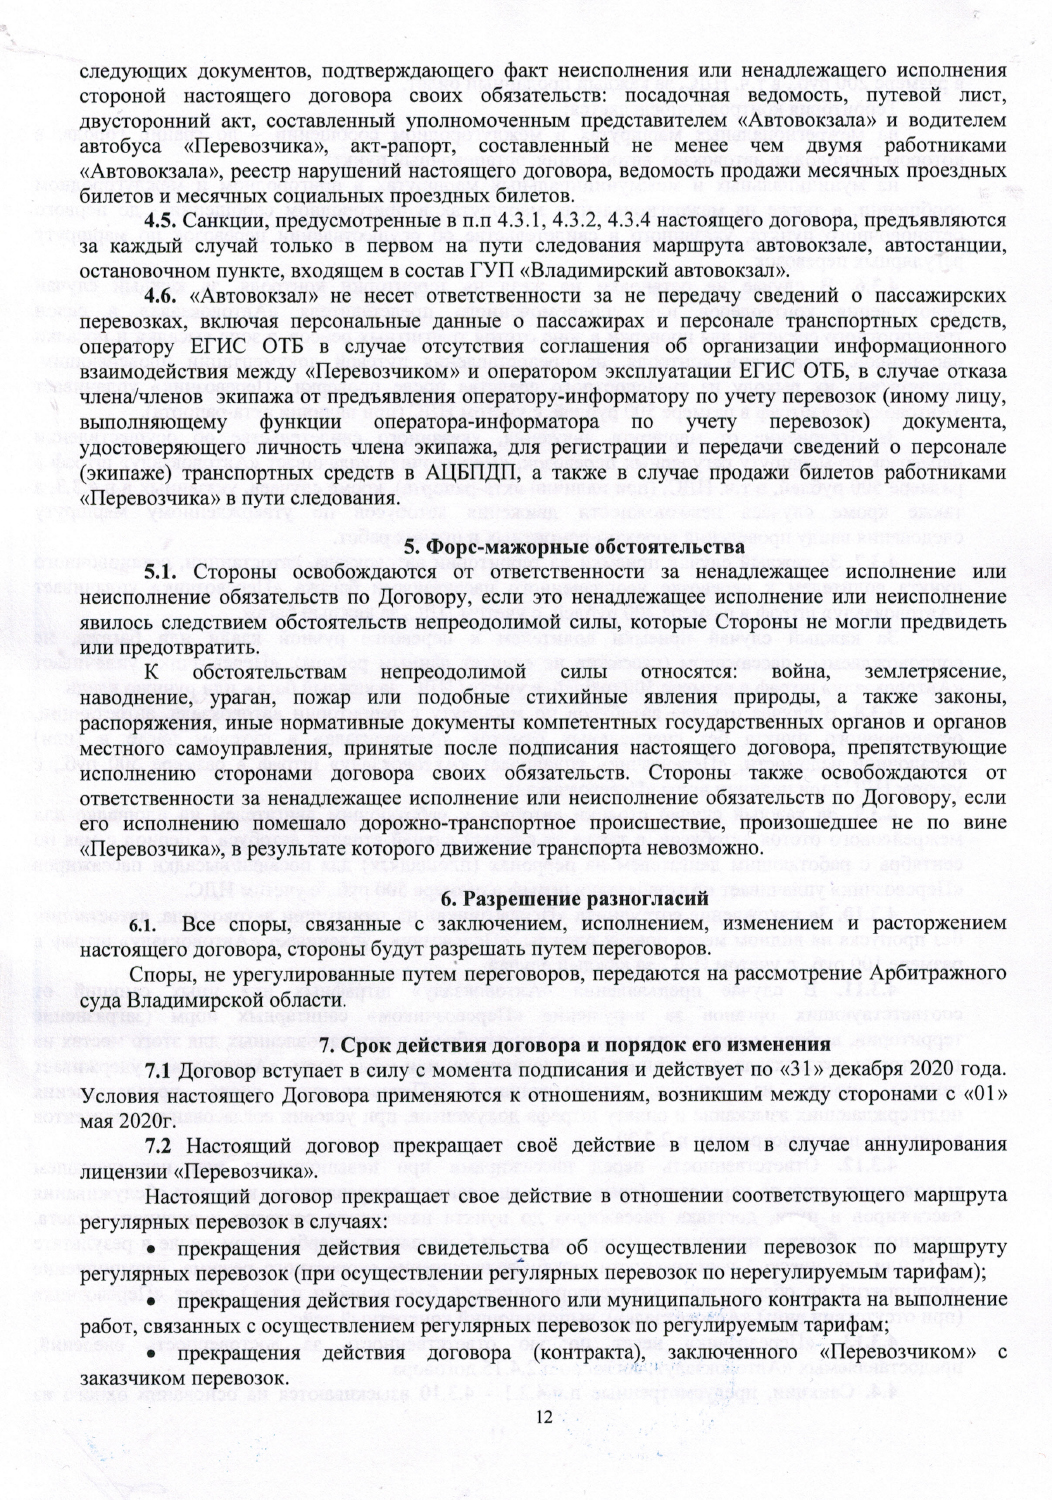 Договор ГУП владимиский вокзал-12.jpg